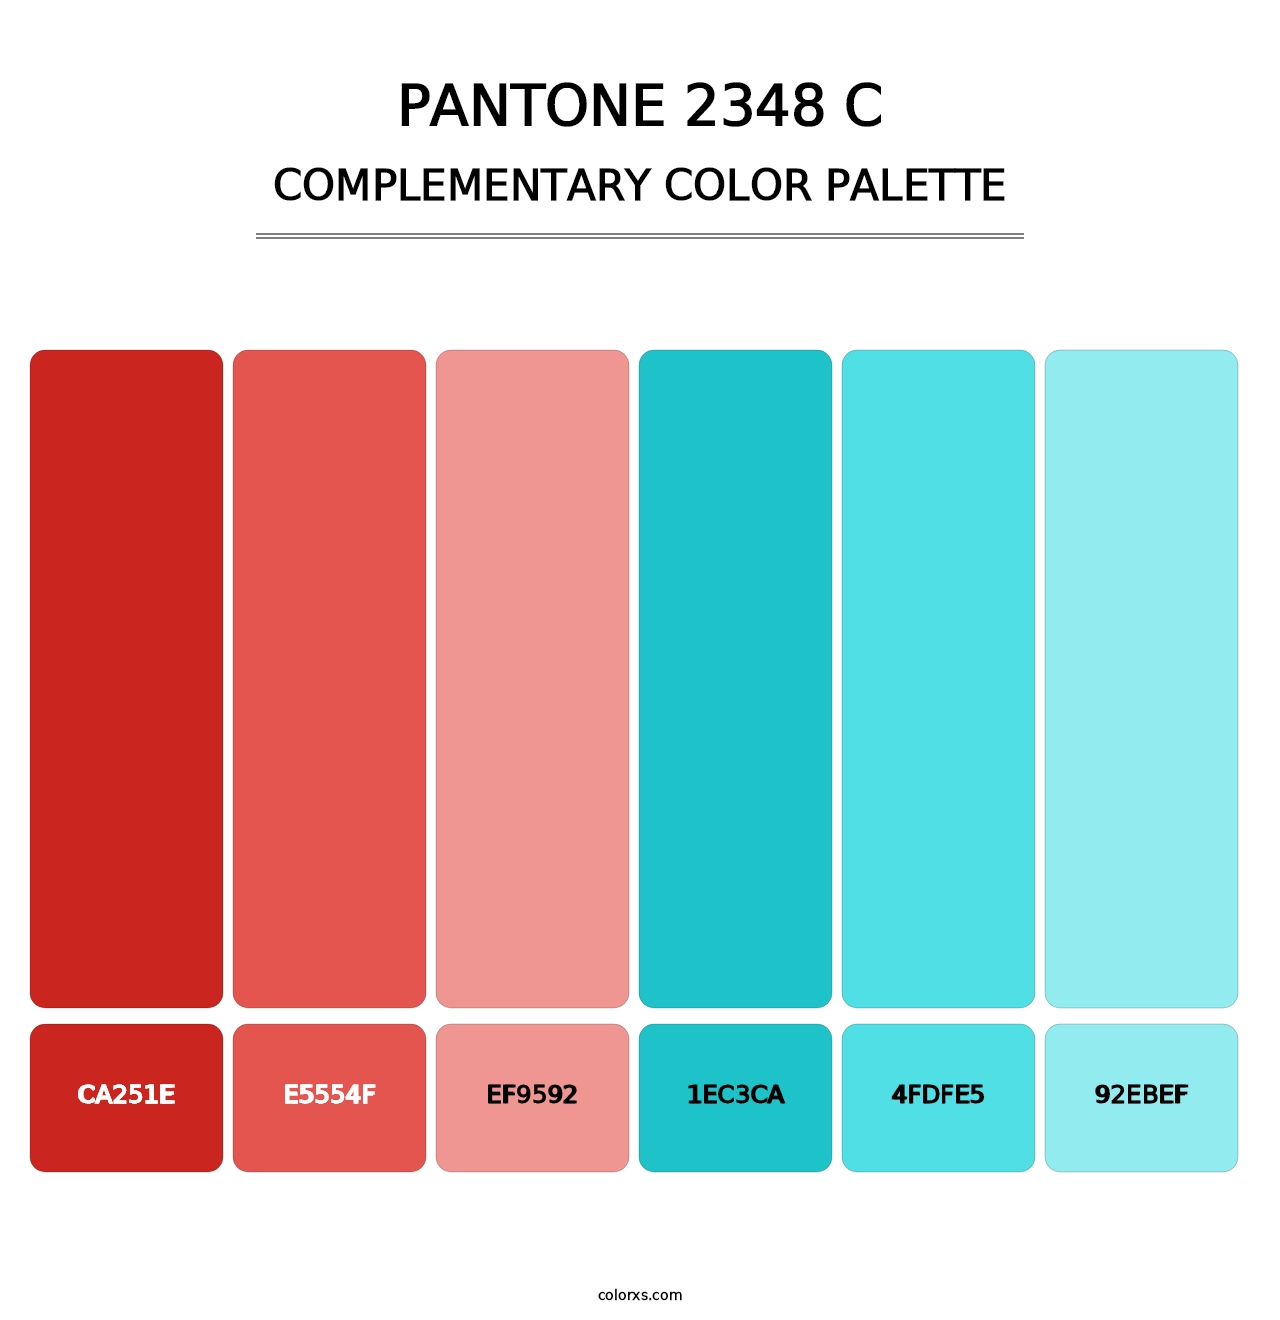 PANTONE 2348 C - Complementary Color Palette